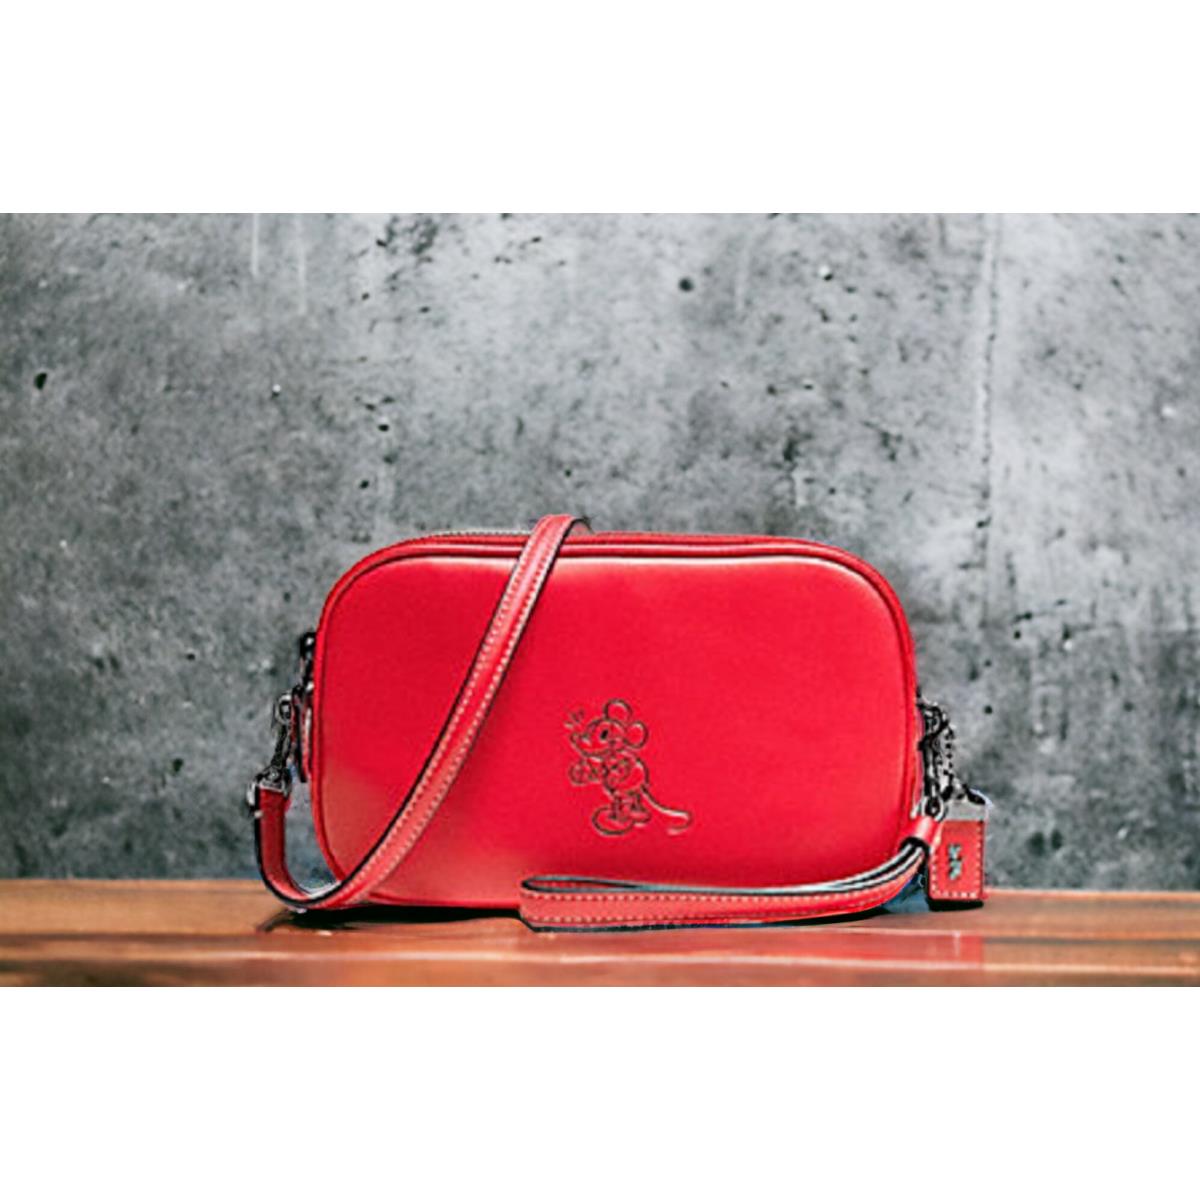 Coach x Disney Mickey Crossbody Clutch Bag in Red Glovetanned Leather 66150